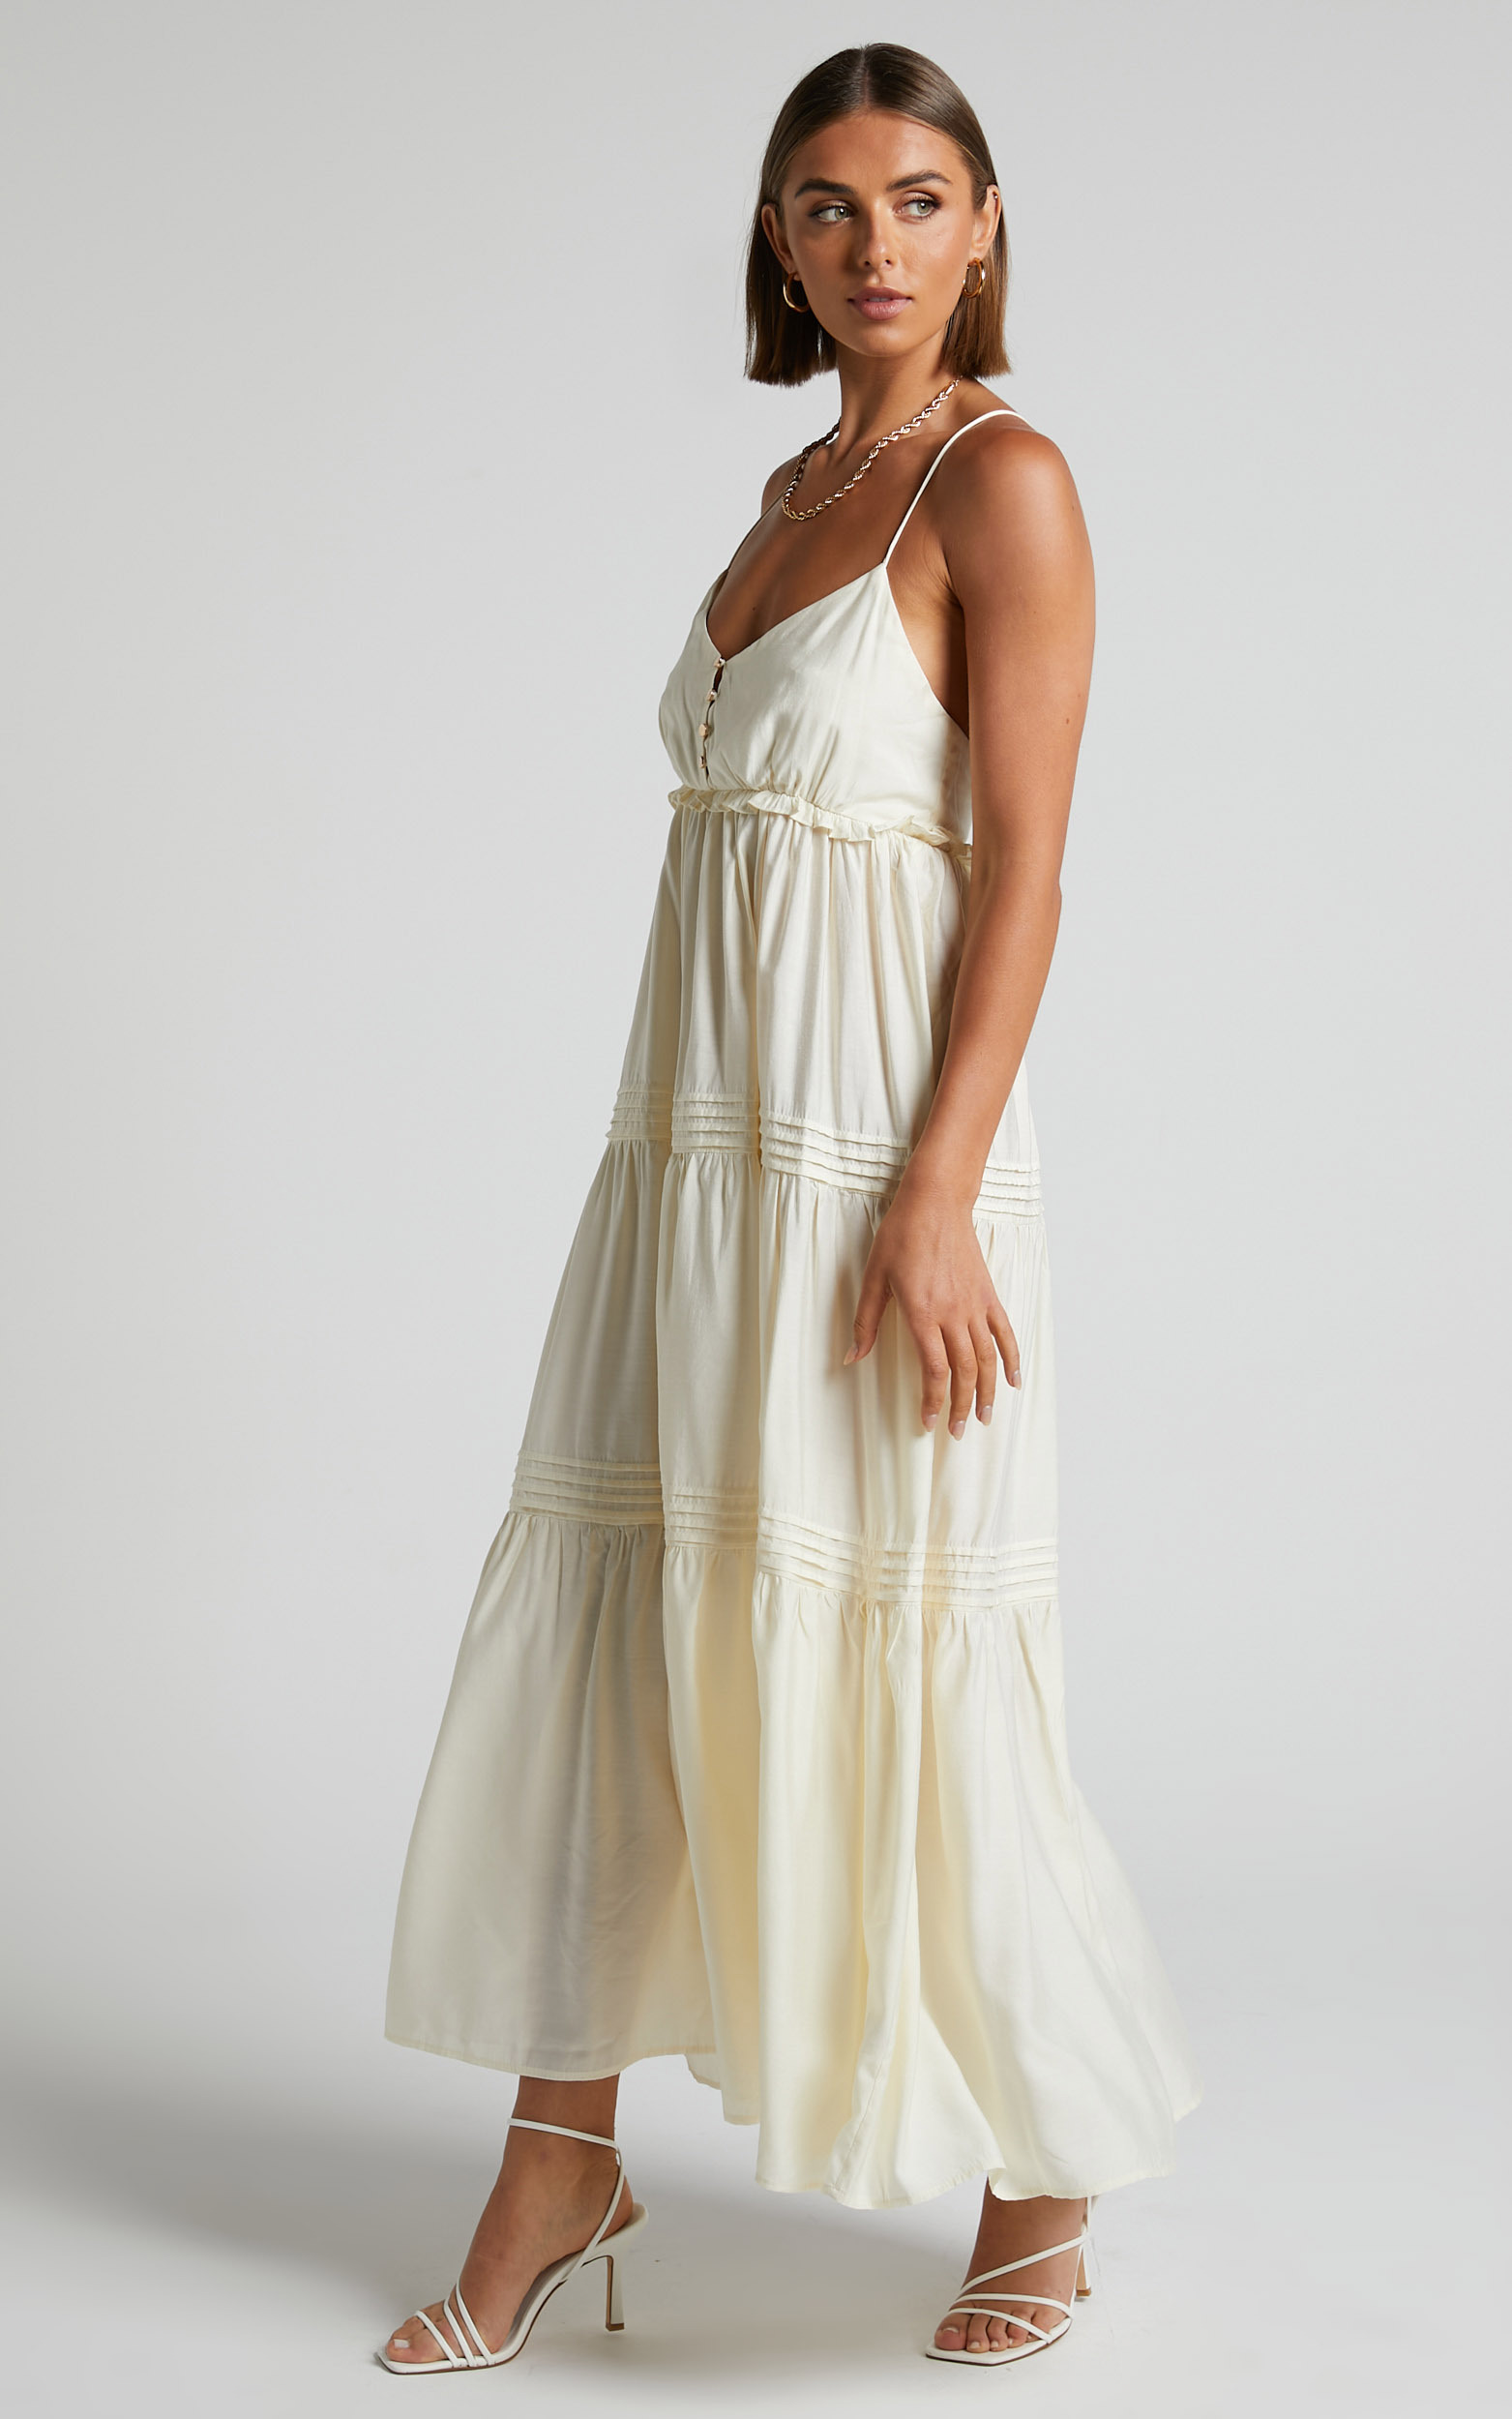 Ermengard Tiered Pin Tuck Cross Back Maxi Dress in Off White | Showpo USA